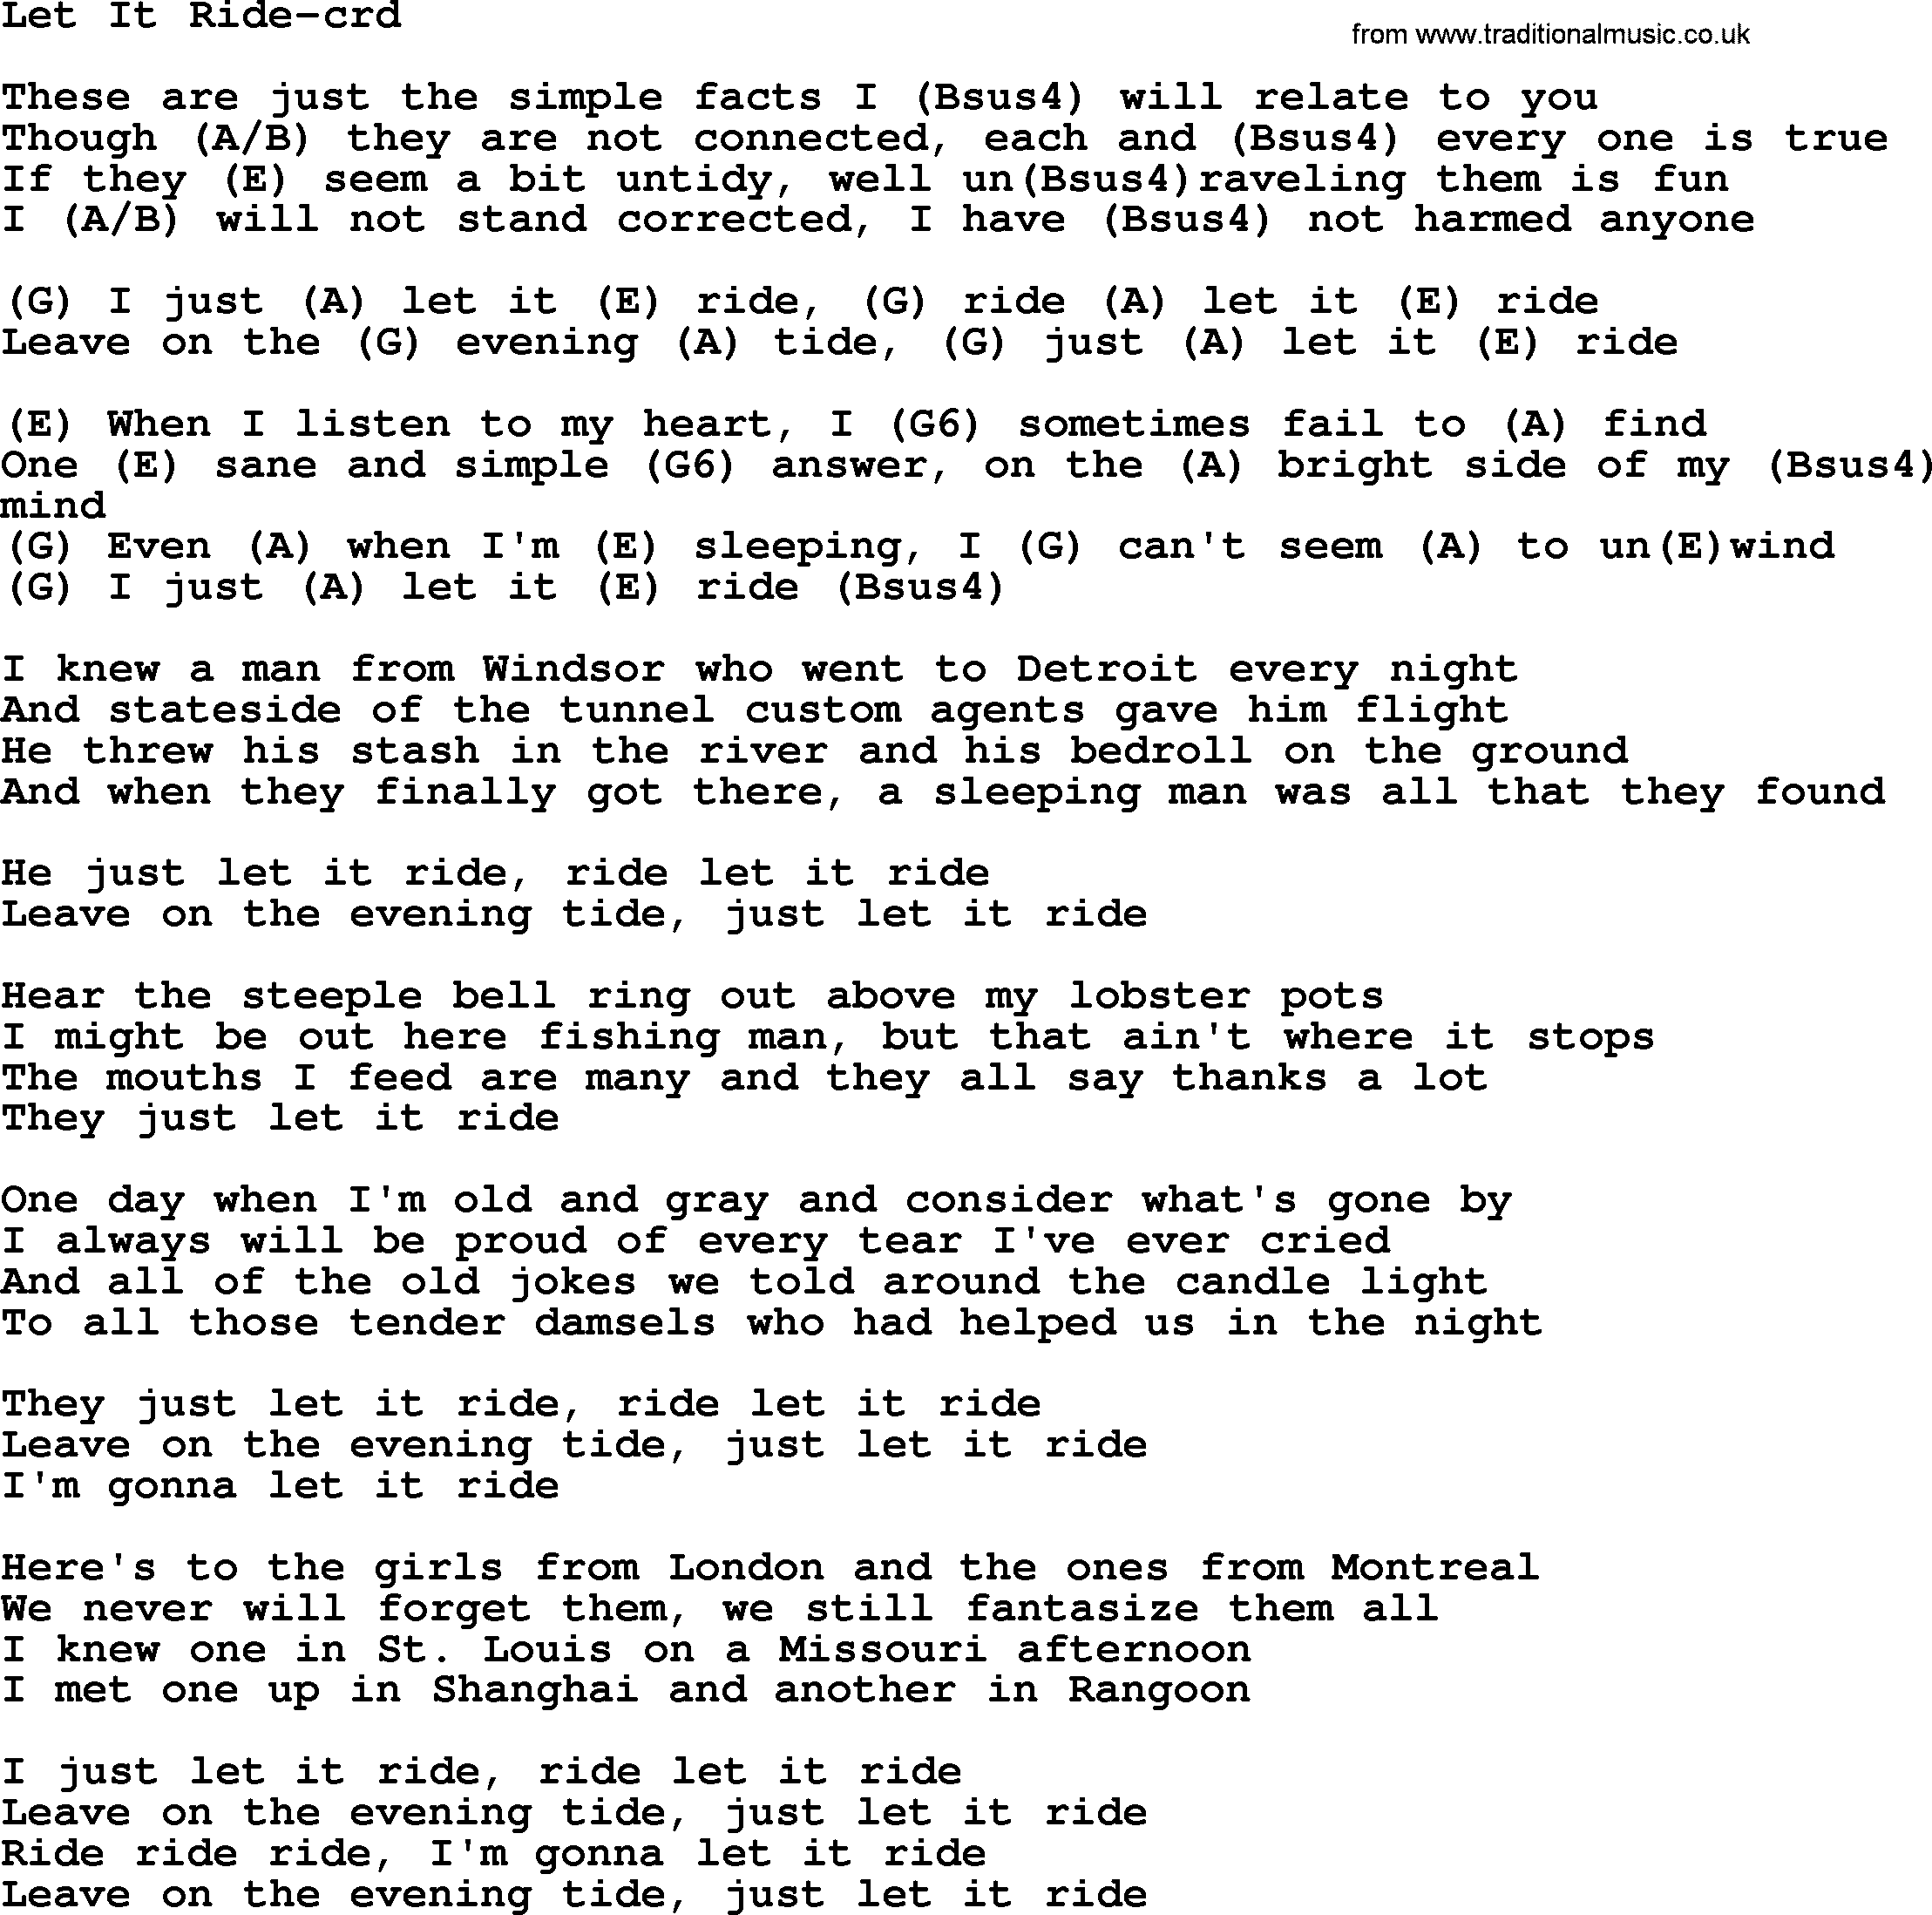 Gordon Lightfoot song Let It Ride, lyrics and chords